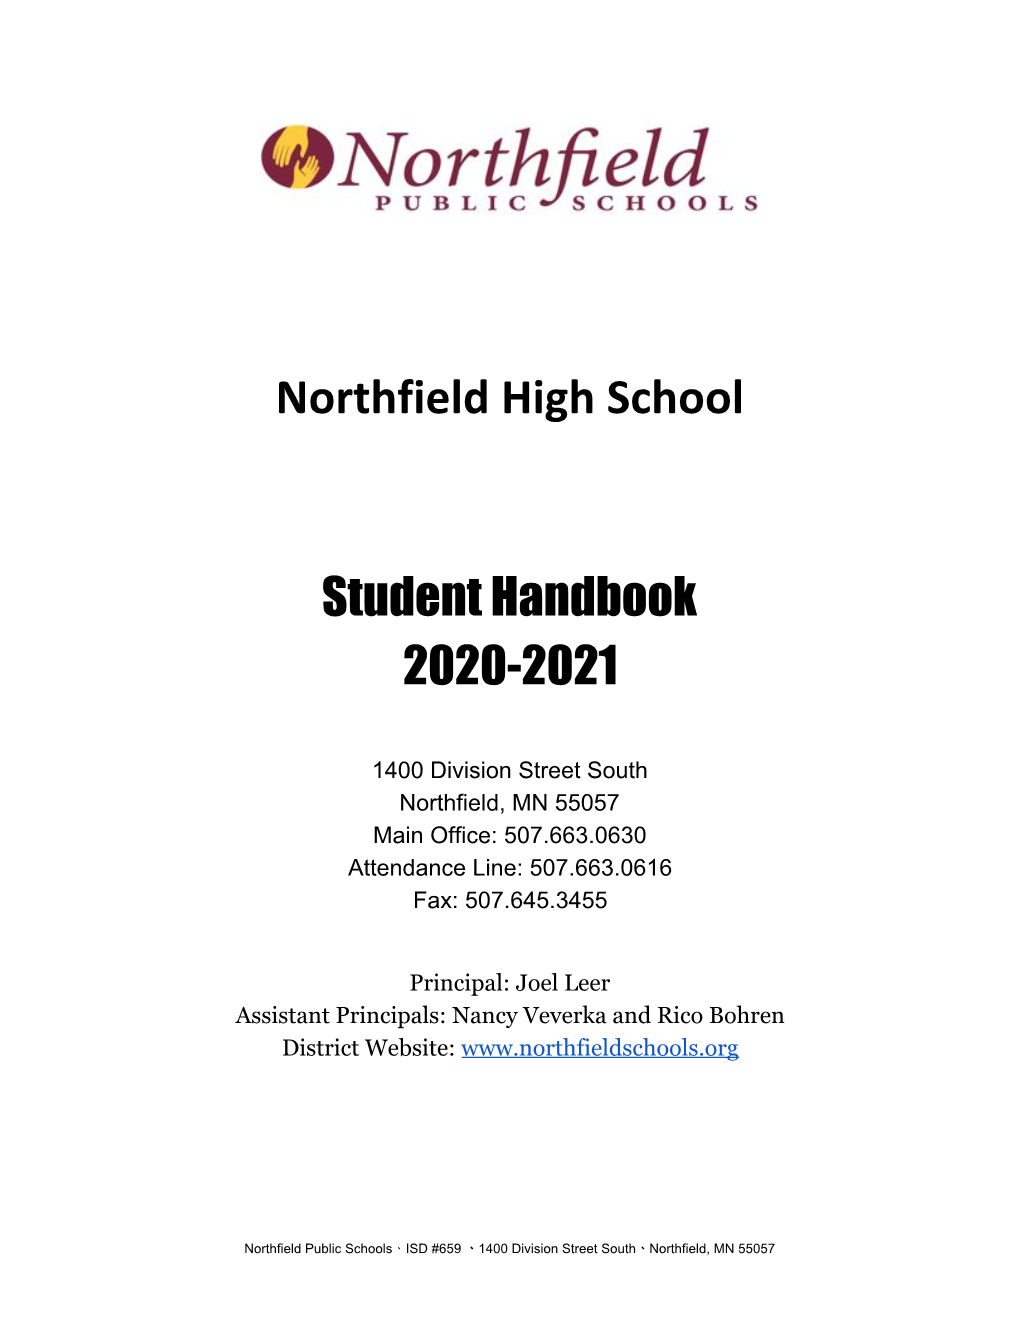 Northfield High School Student Handbook 2020-2021